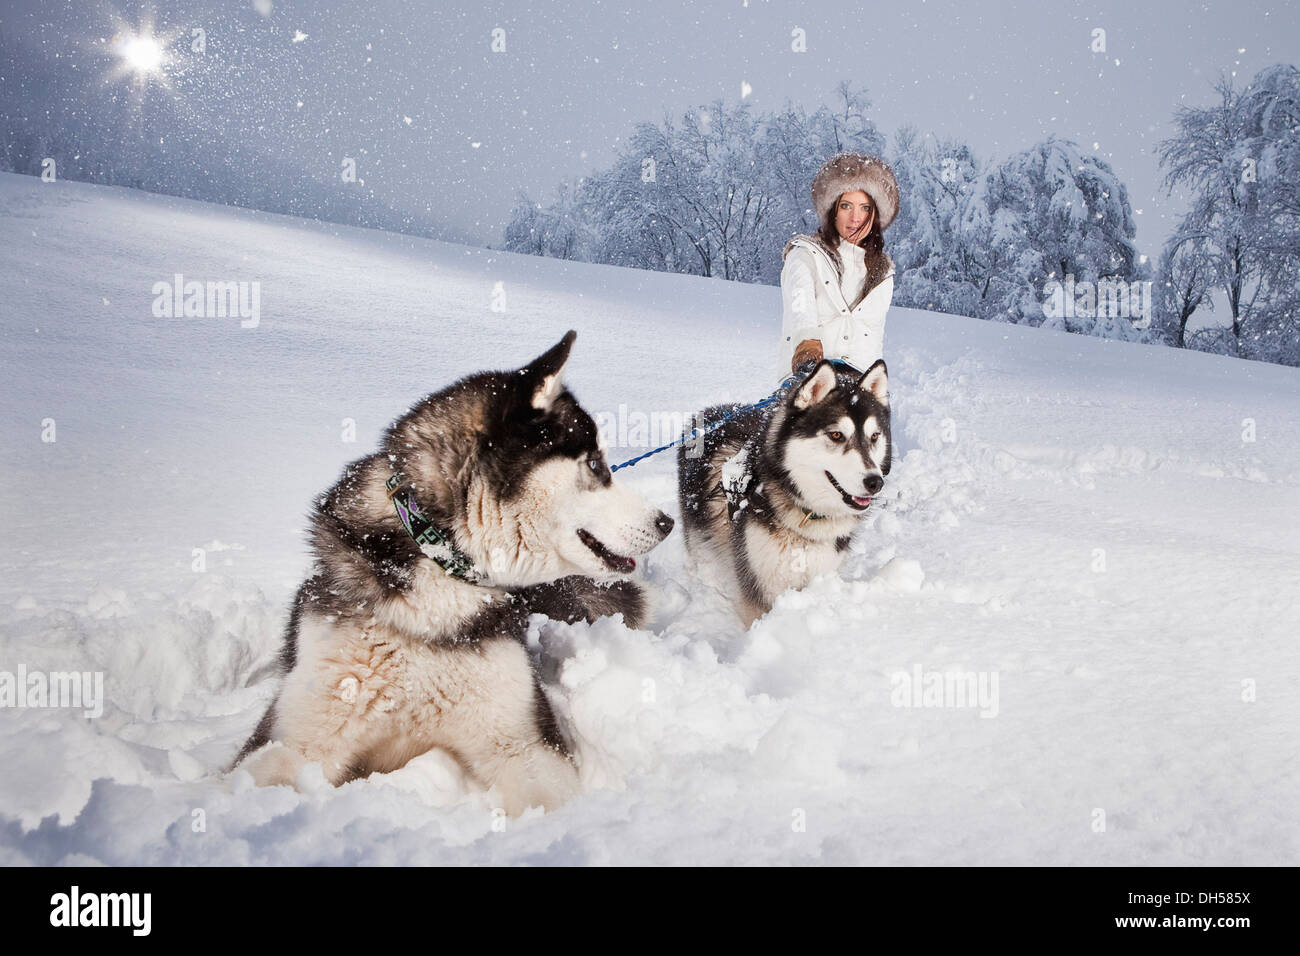 Giovane donna con huskies nella neve, Kolsassberg, Innsbruck-Stadt distretto, Tirolo del Nord, Tirolo, Austria Foto Stock